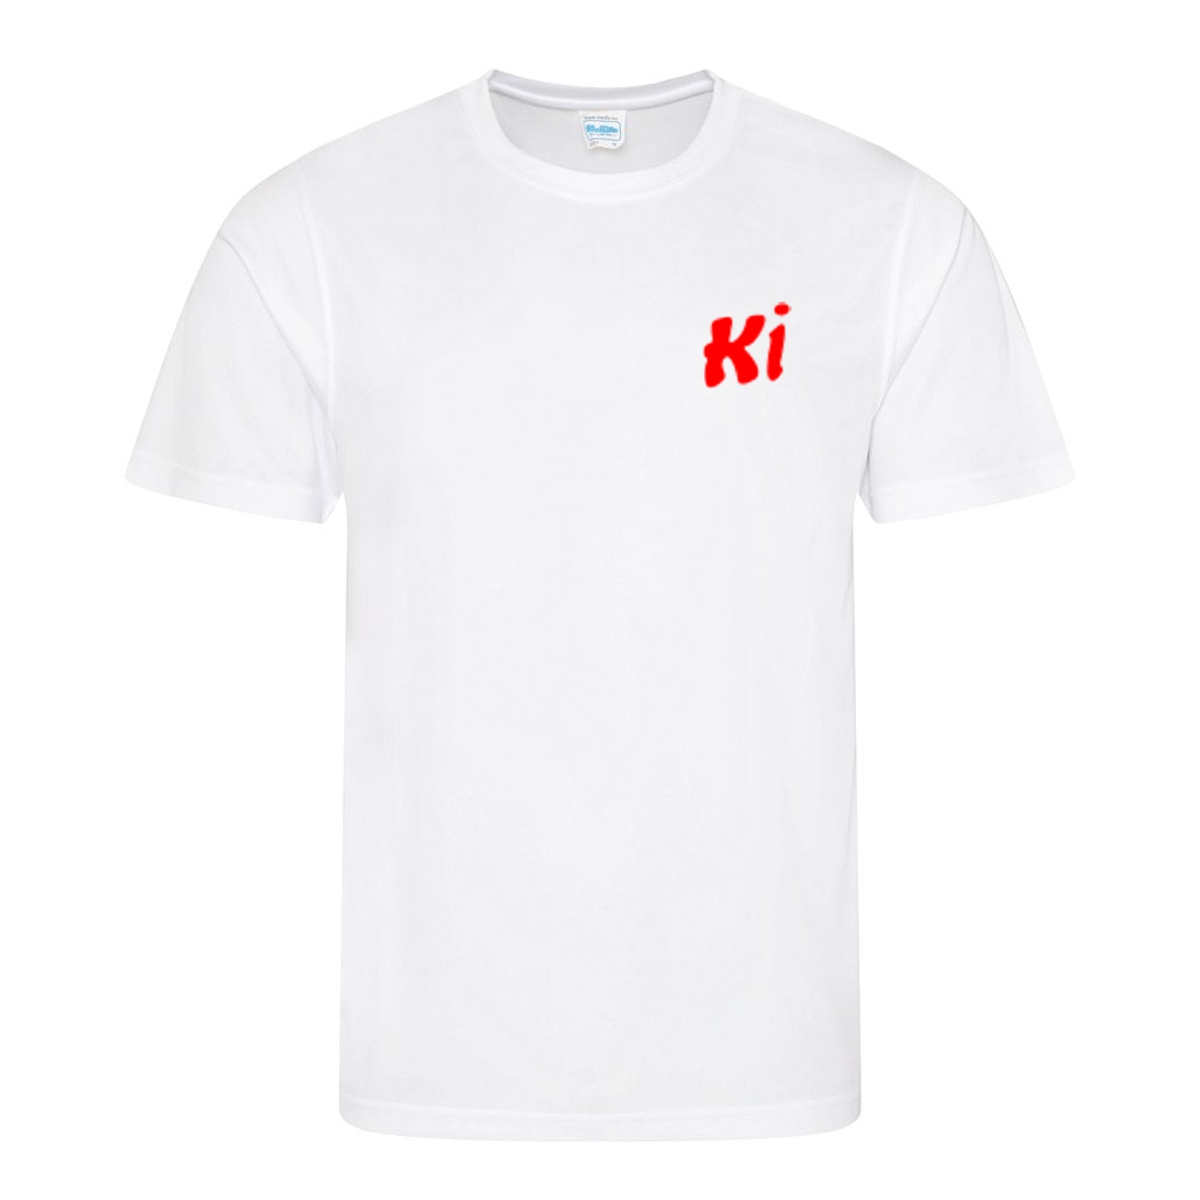 Ki Martial Arts Just Cool Sport T shirt